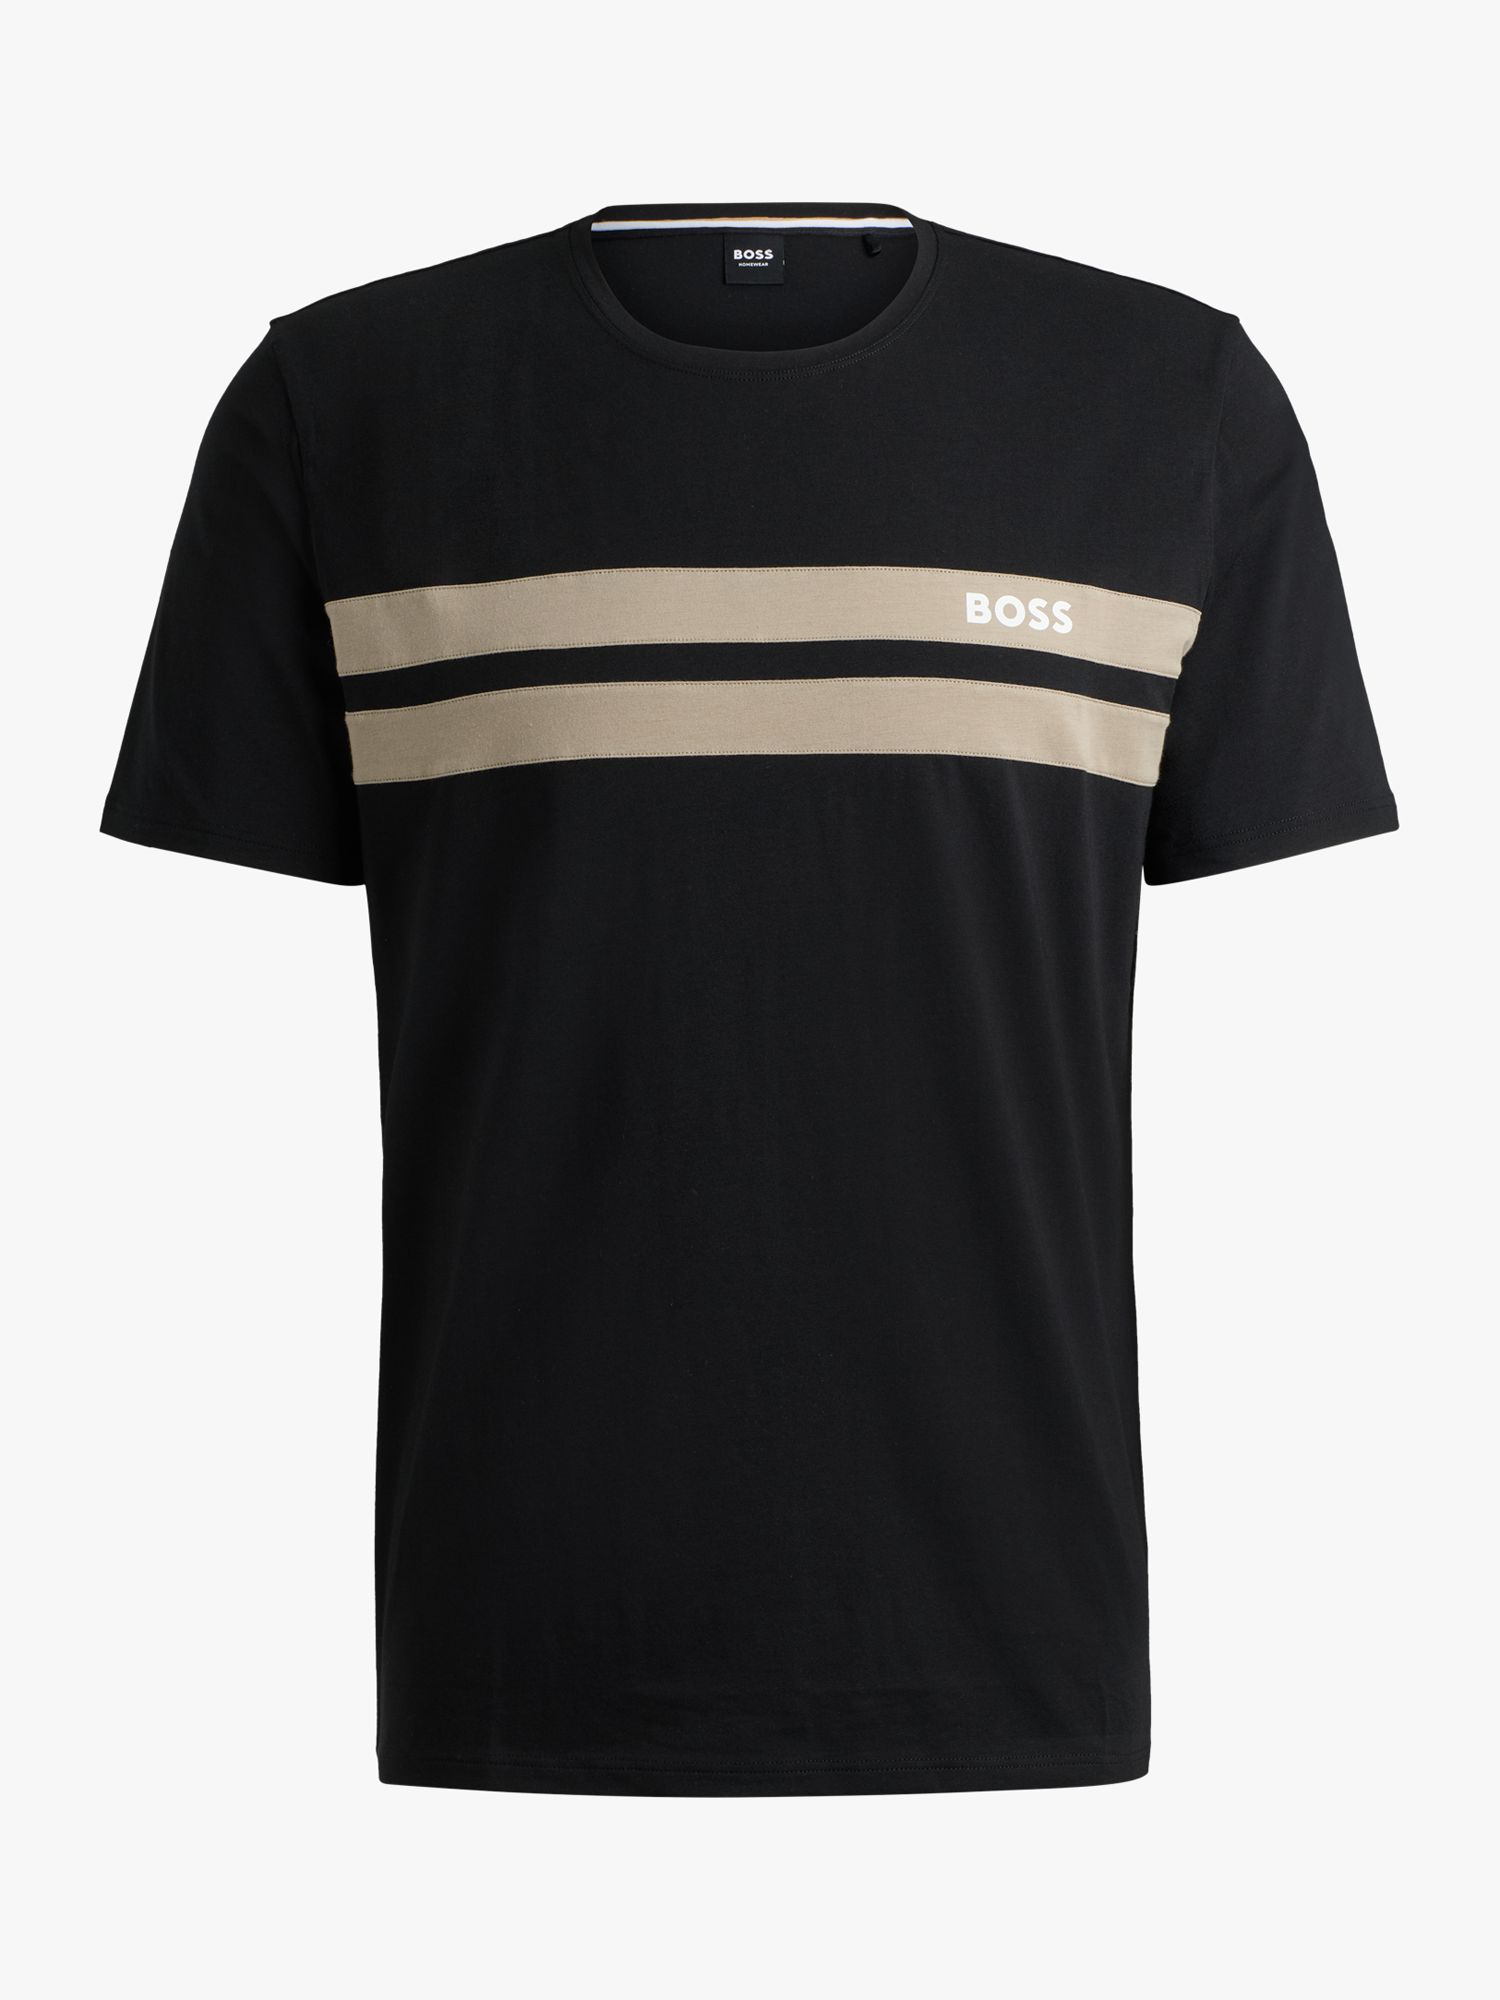 Buy BOSS Balance T-Shirt, Black Online at johnlewis.com